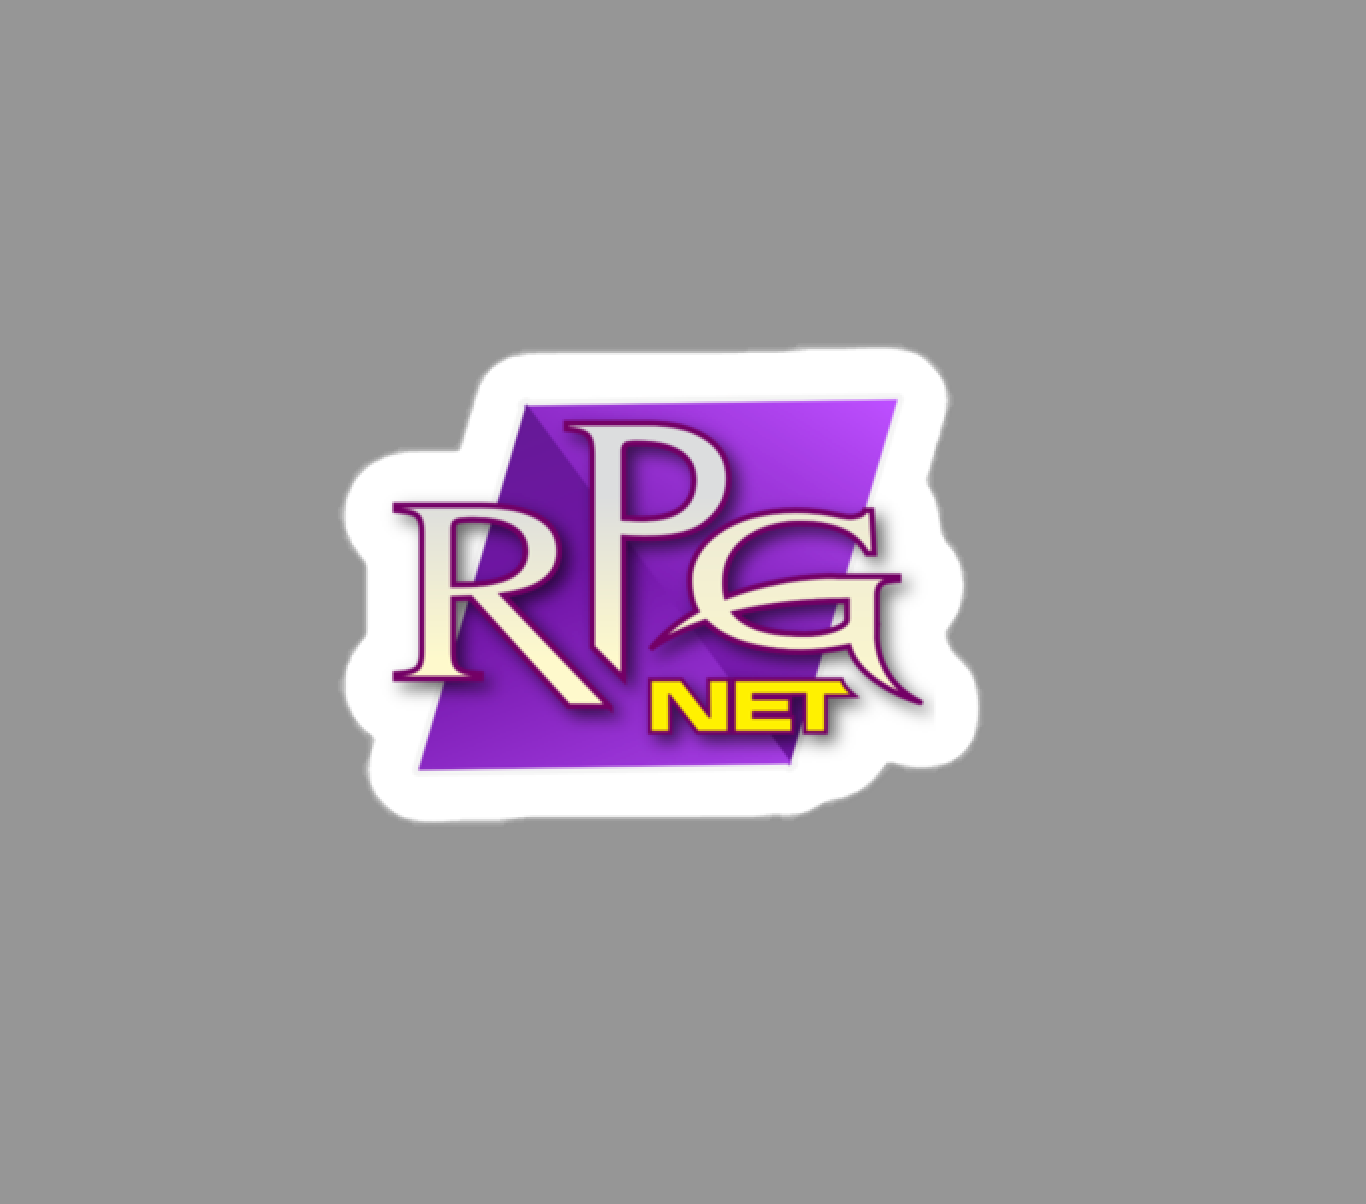 RPGnet Sticker 3"